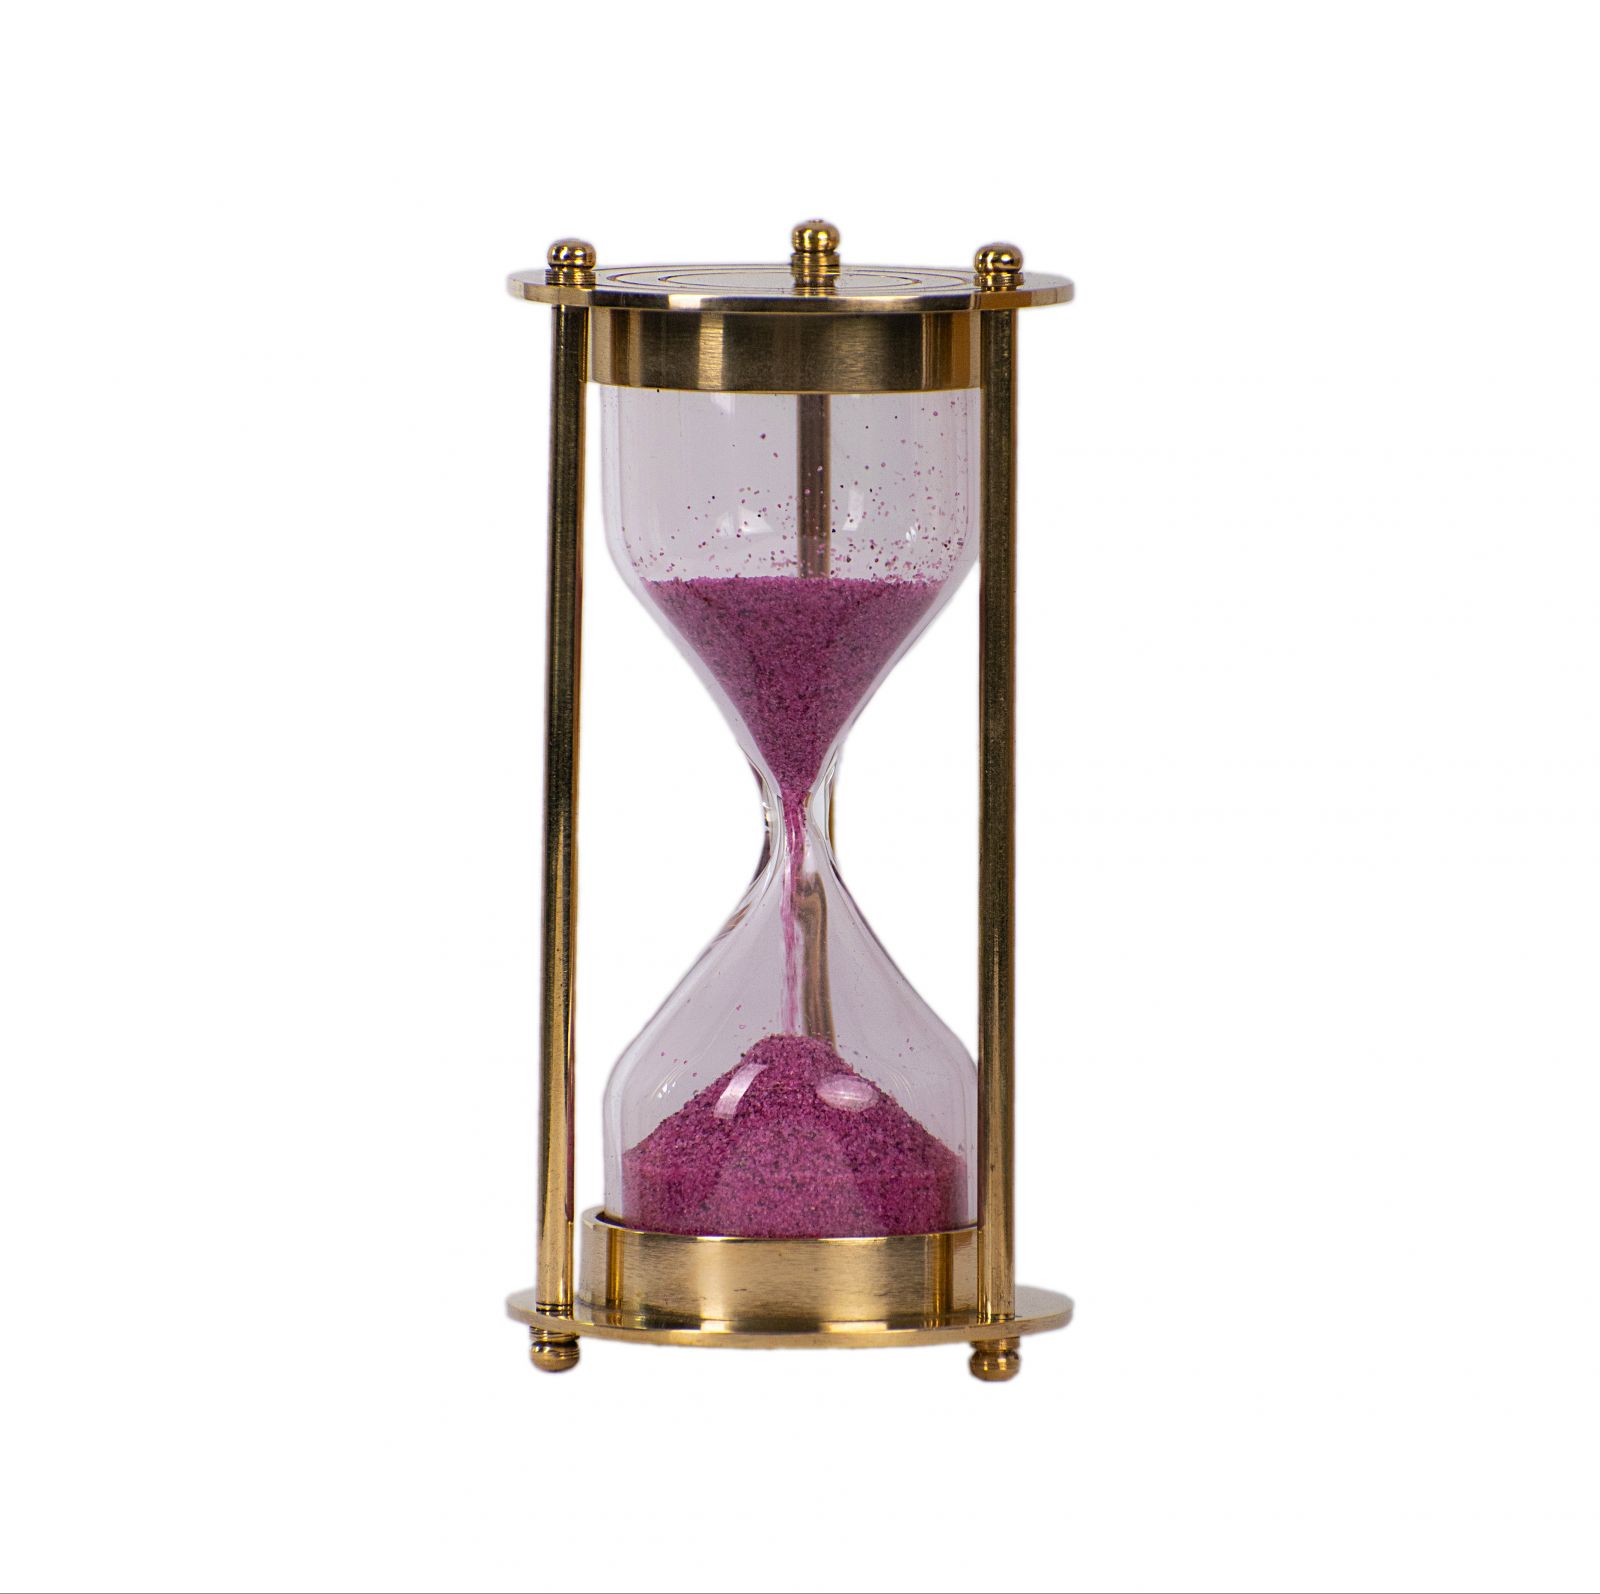 Decorative hourglass (1 minute) – pink sand India